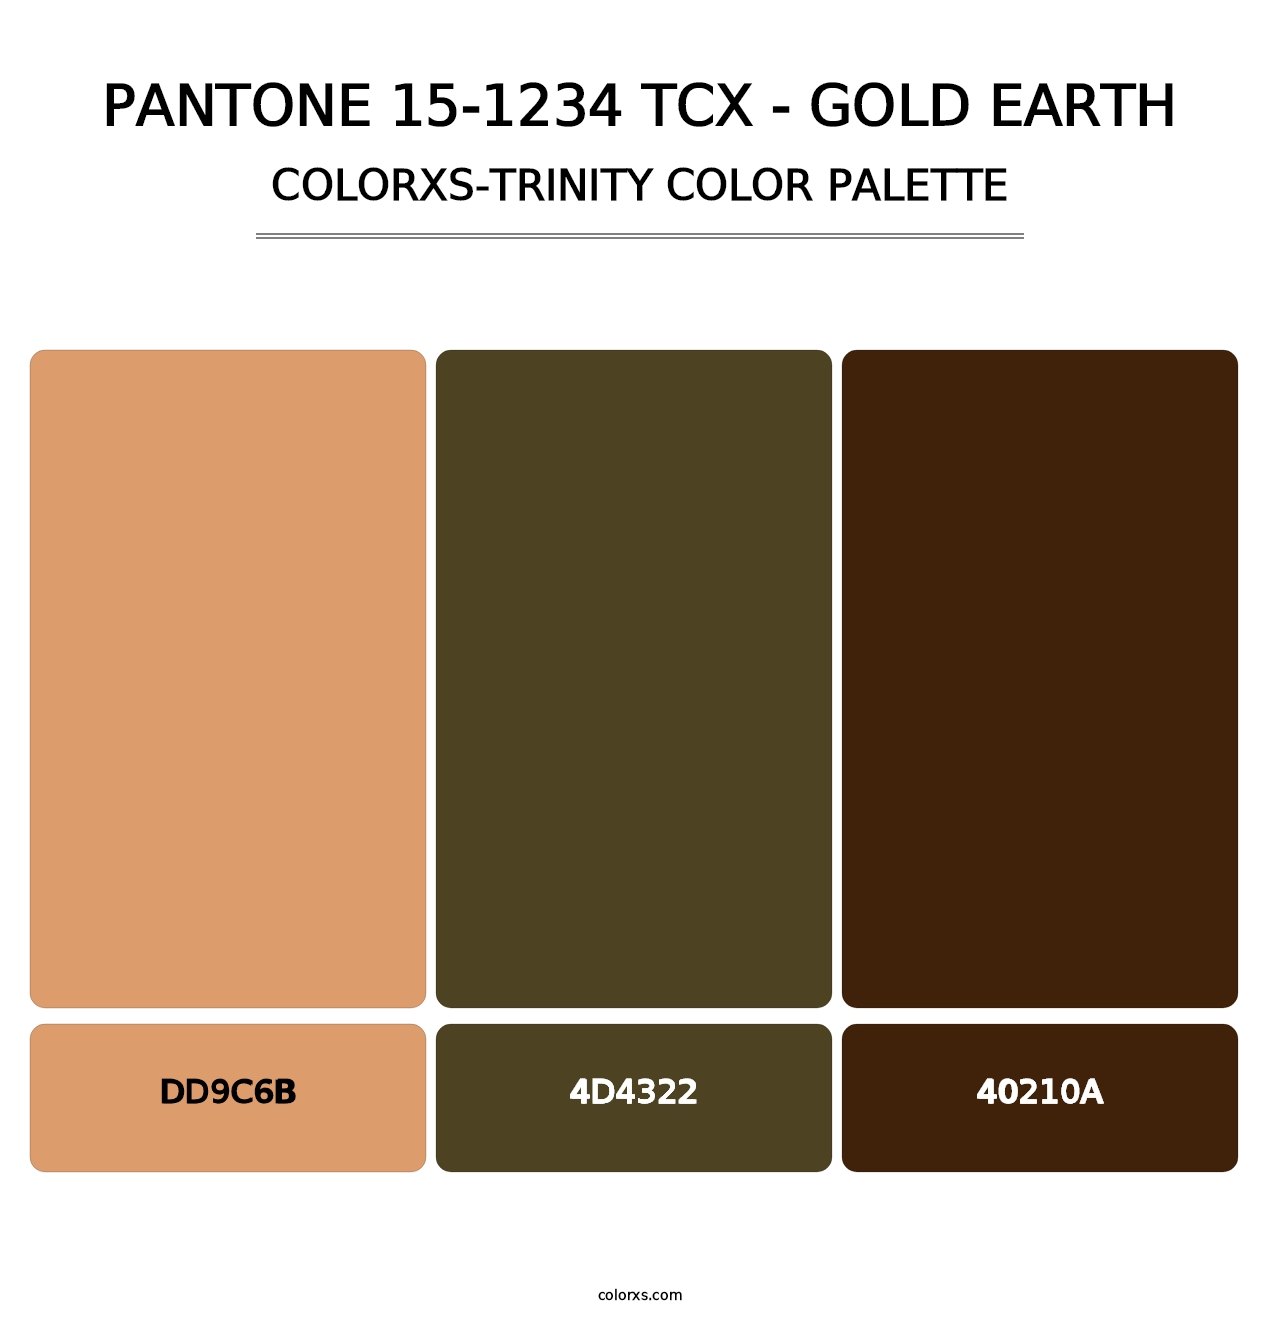 PANTONE 15-1234 TCX - Gold Earth - Colorxs Trinity Palette